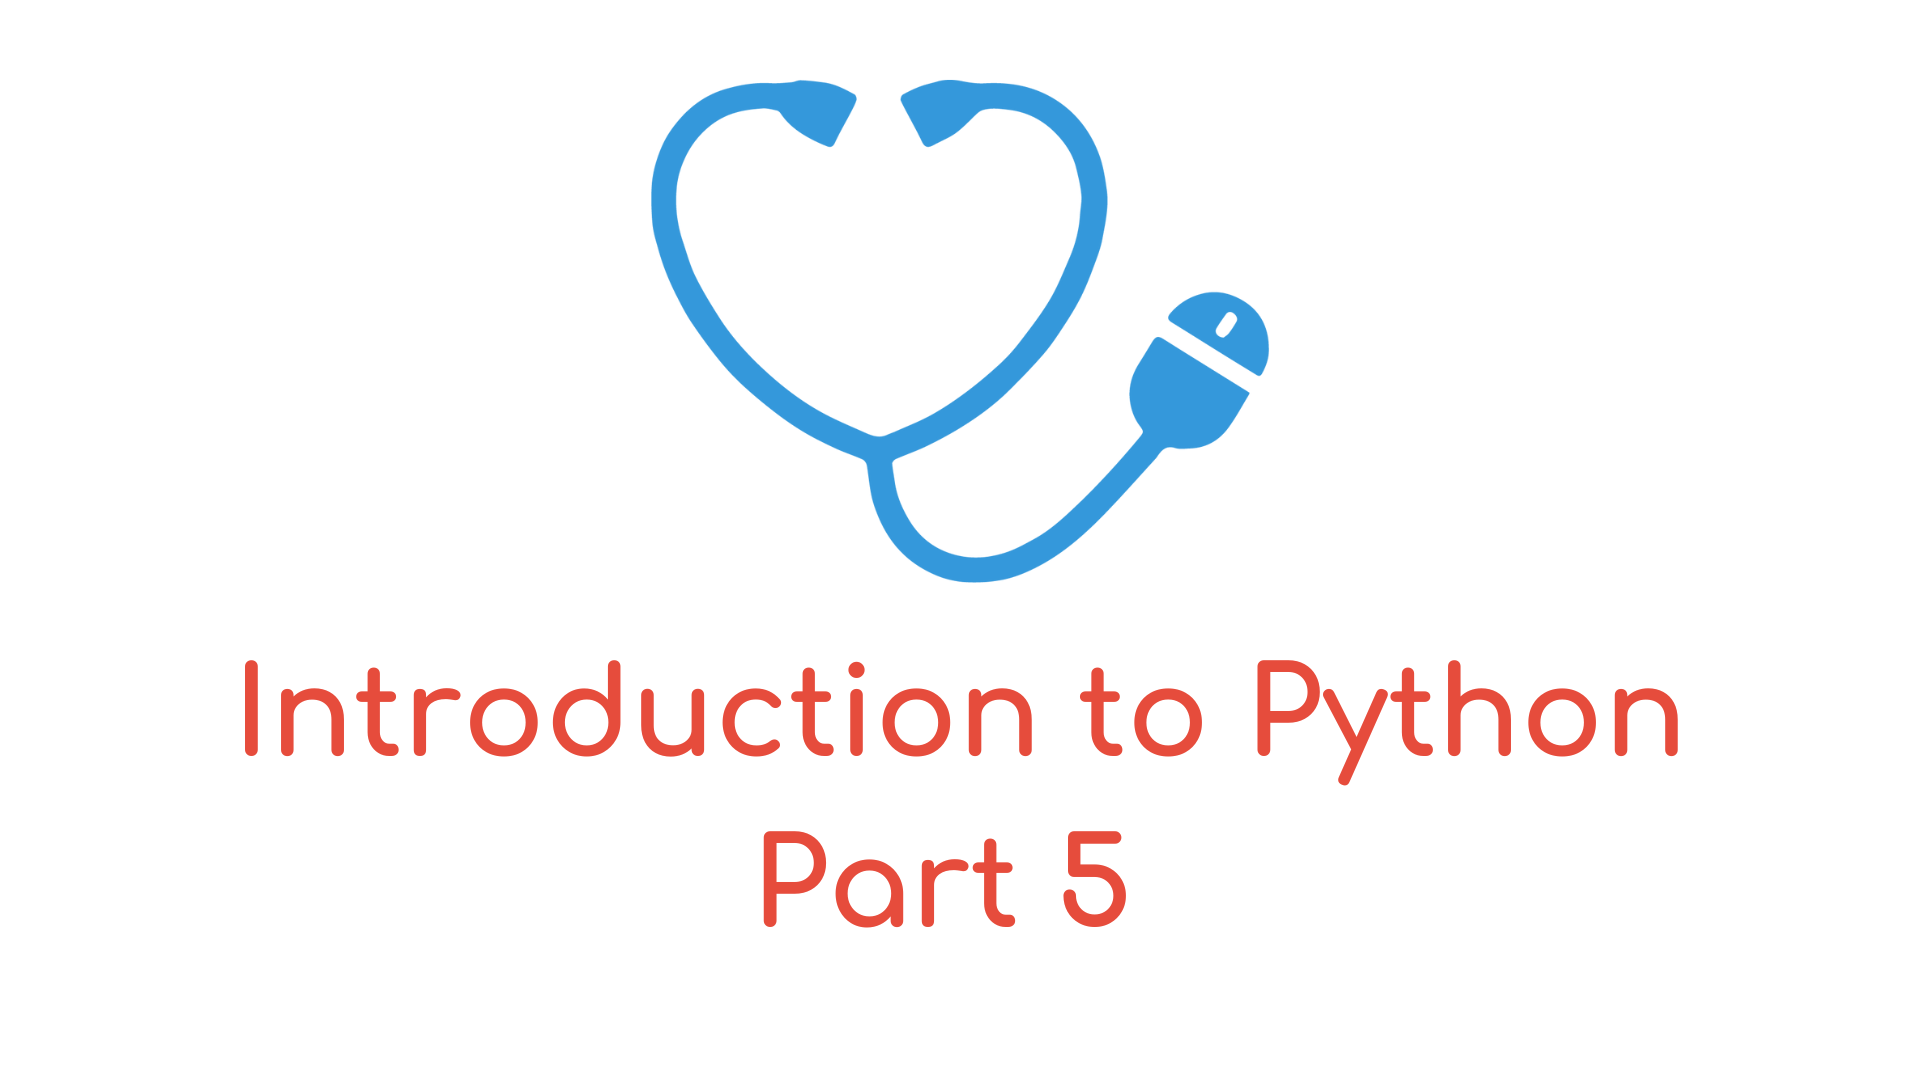 Intro to Python Pt. 5